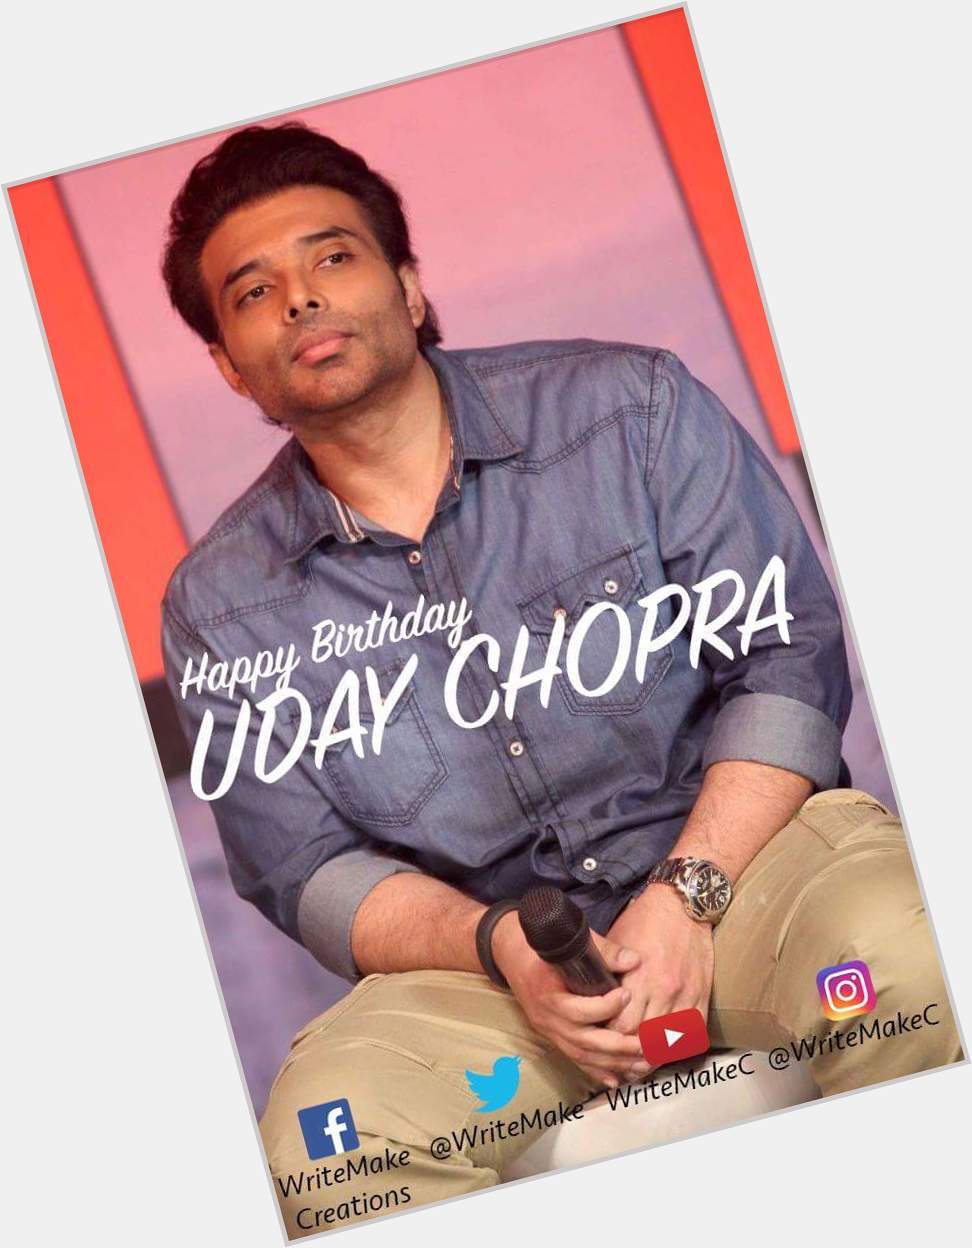 We would like to wish Uday Chopra a wonderful Happy Birthday from -    